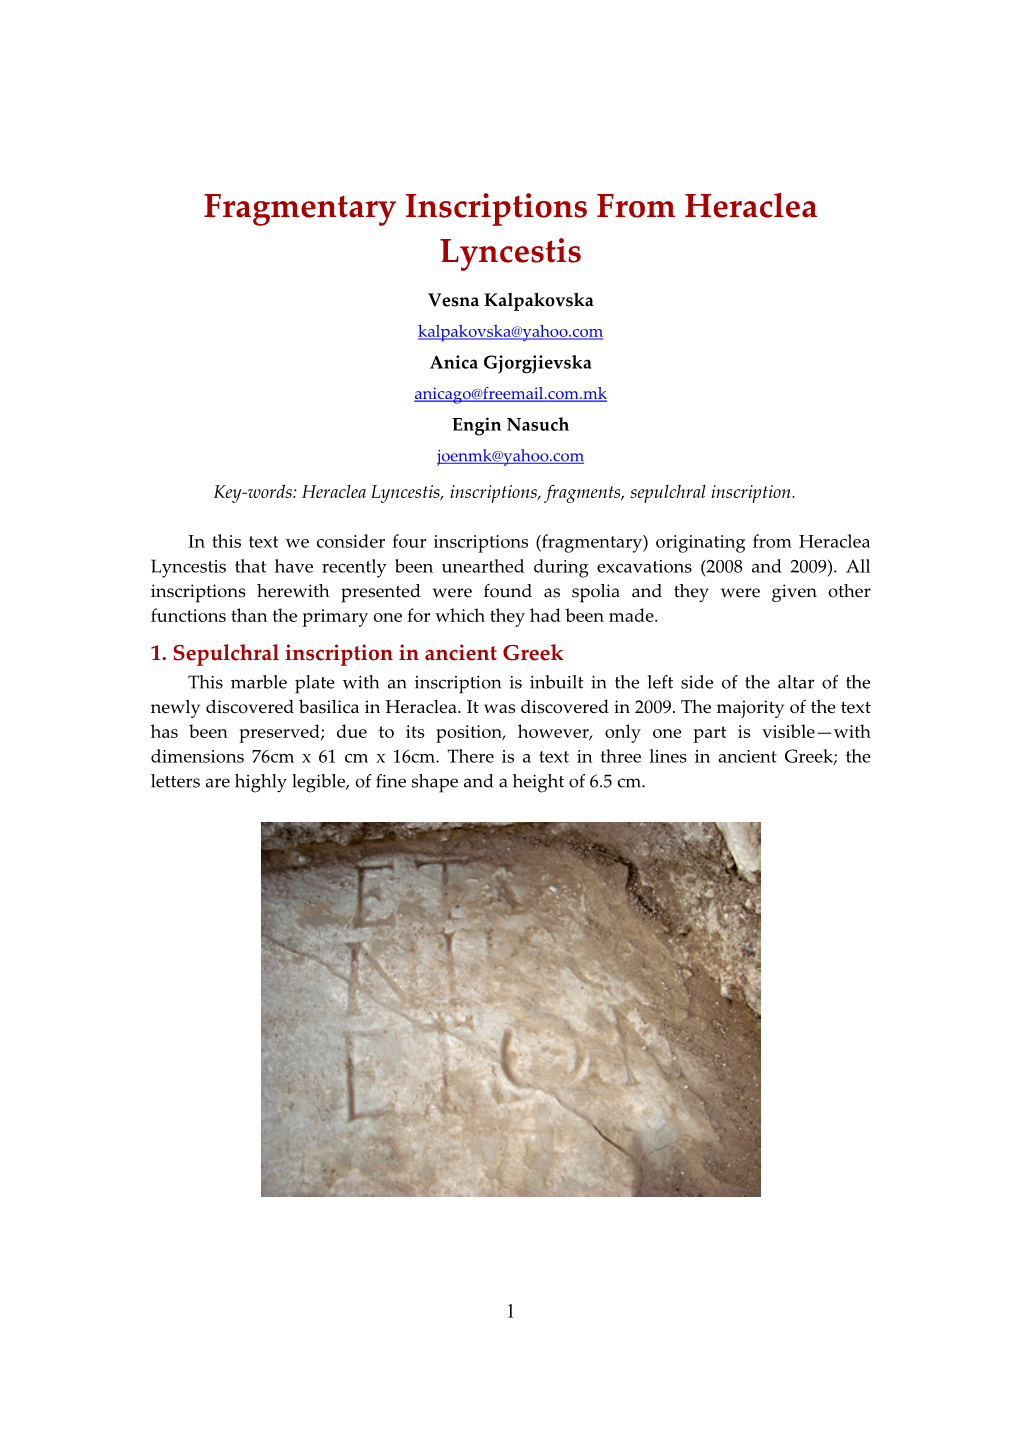 Fragmentary Inscriptions from Heraclea Lyncestis